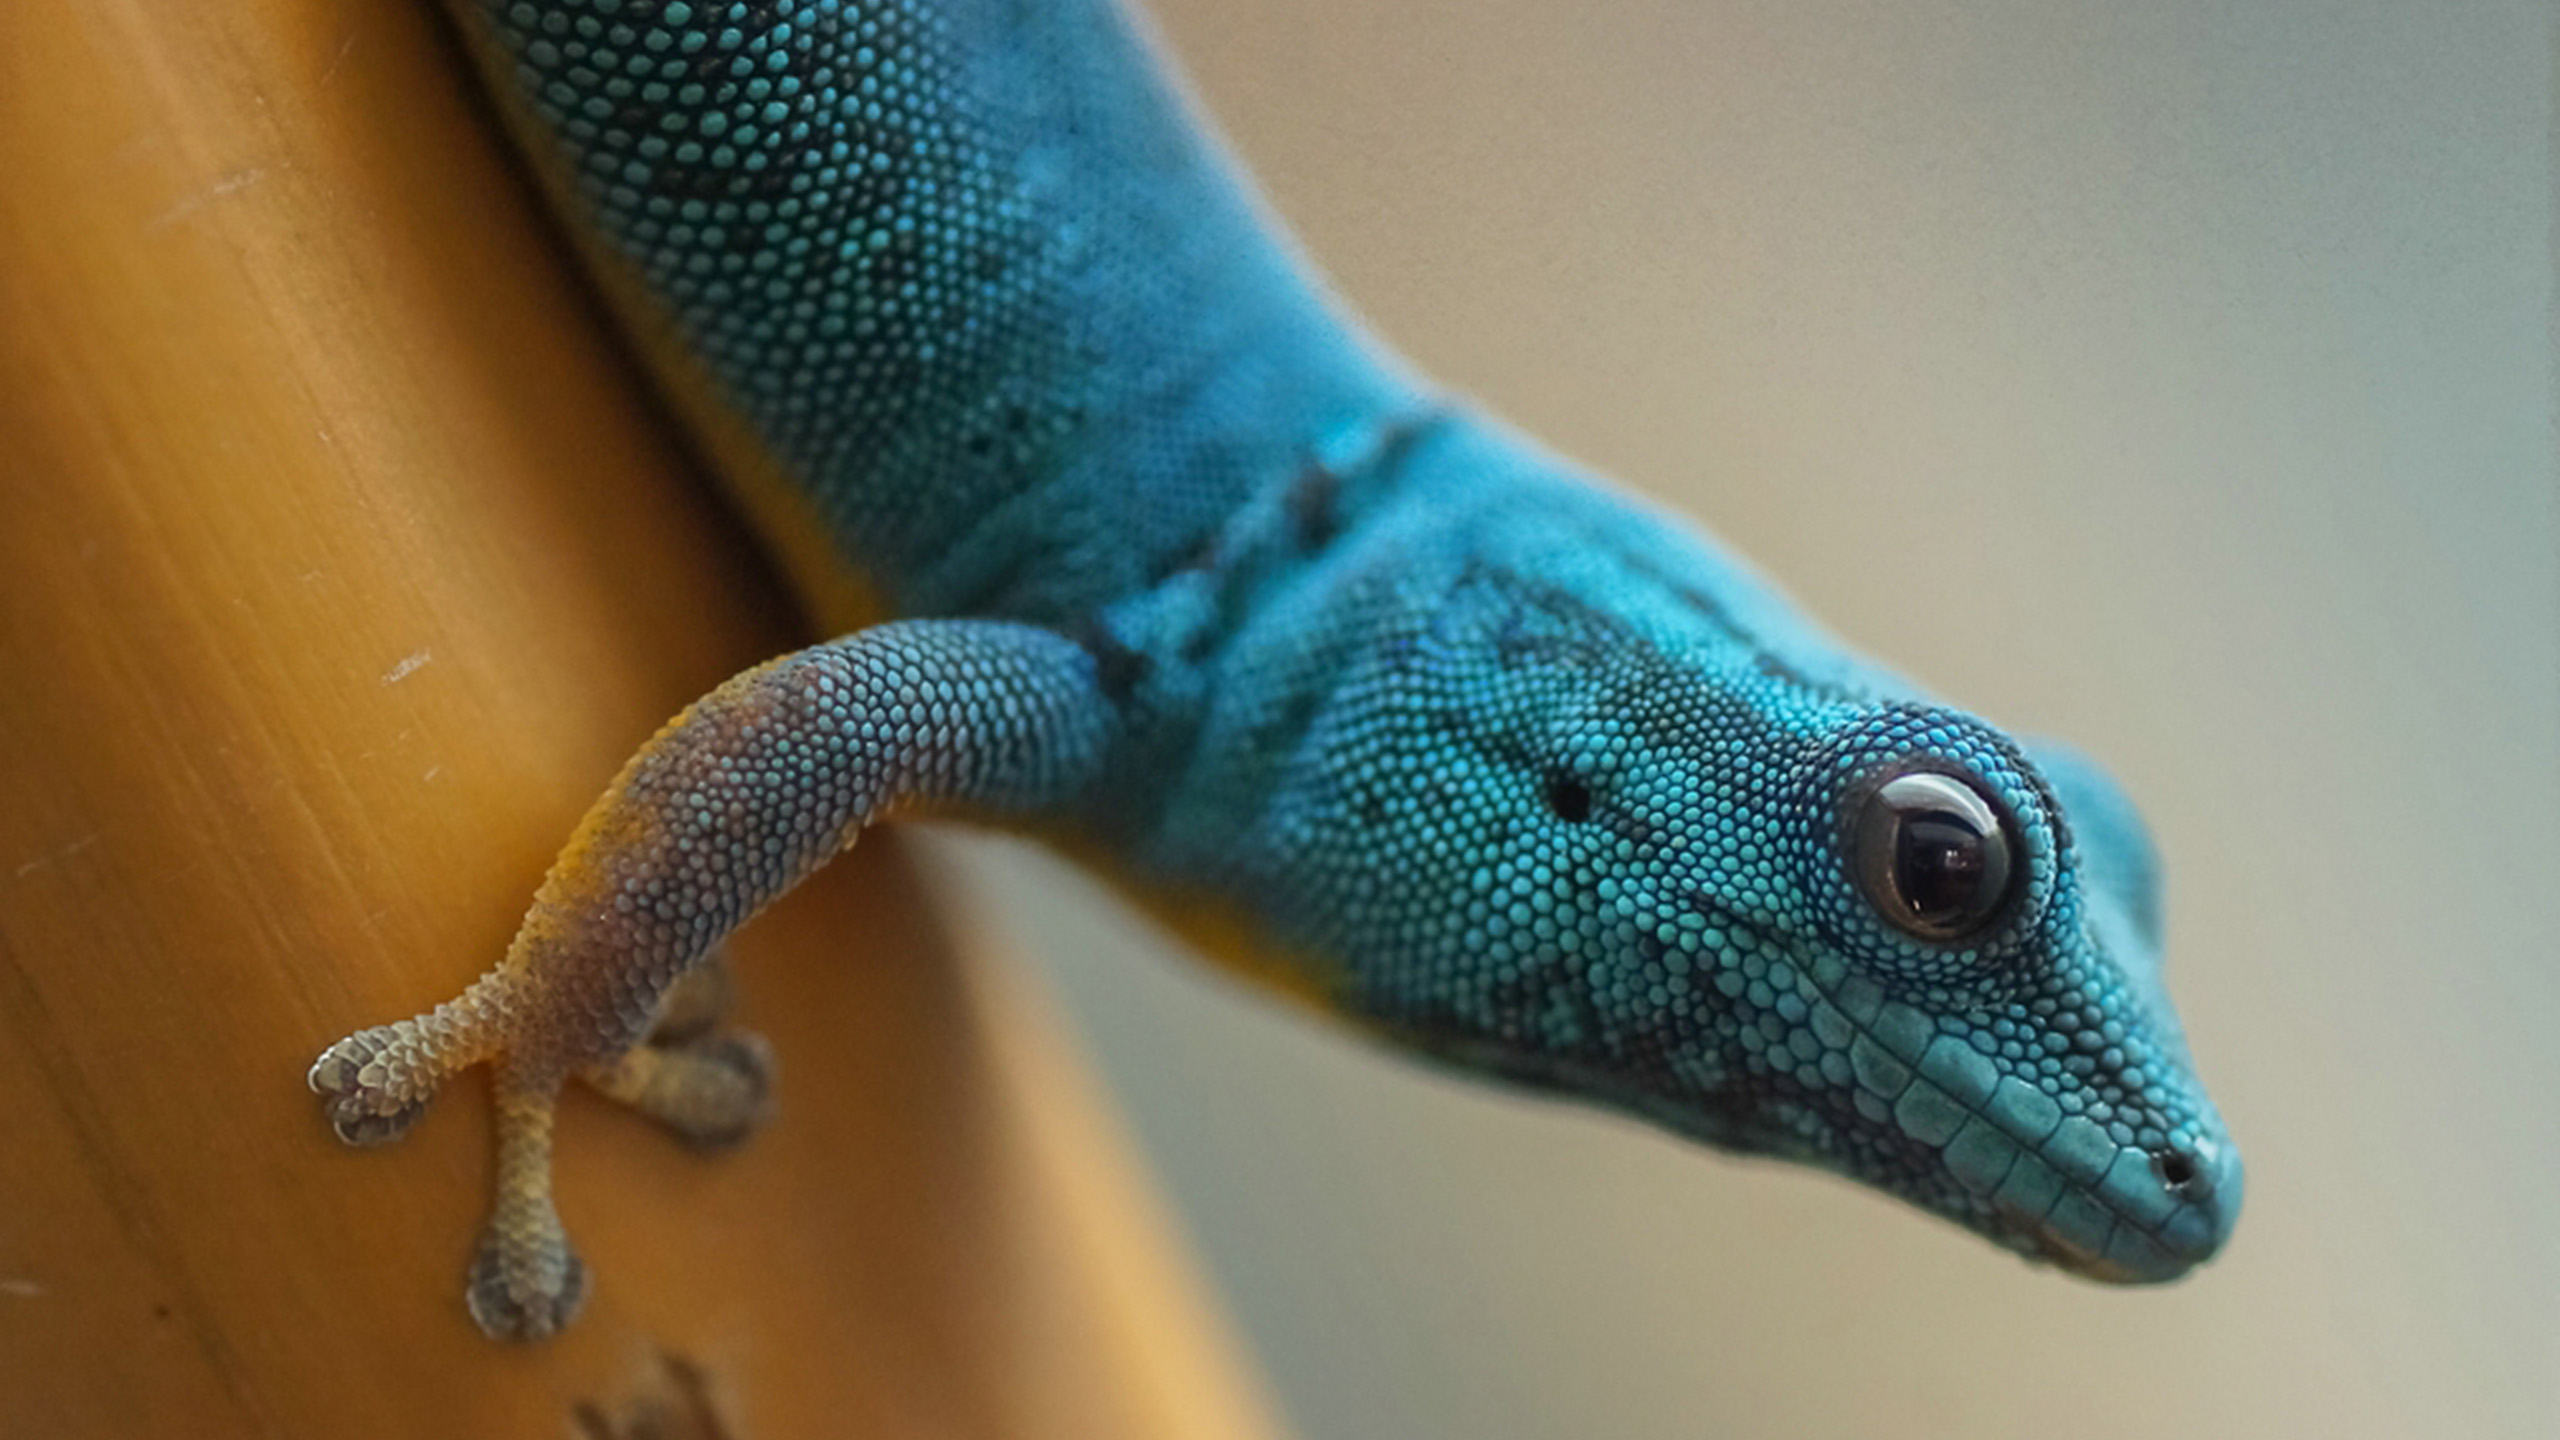 Lygodactylus williamsi | to.wi, CC BY-NC-SA 2.0, via flickr